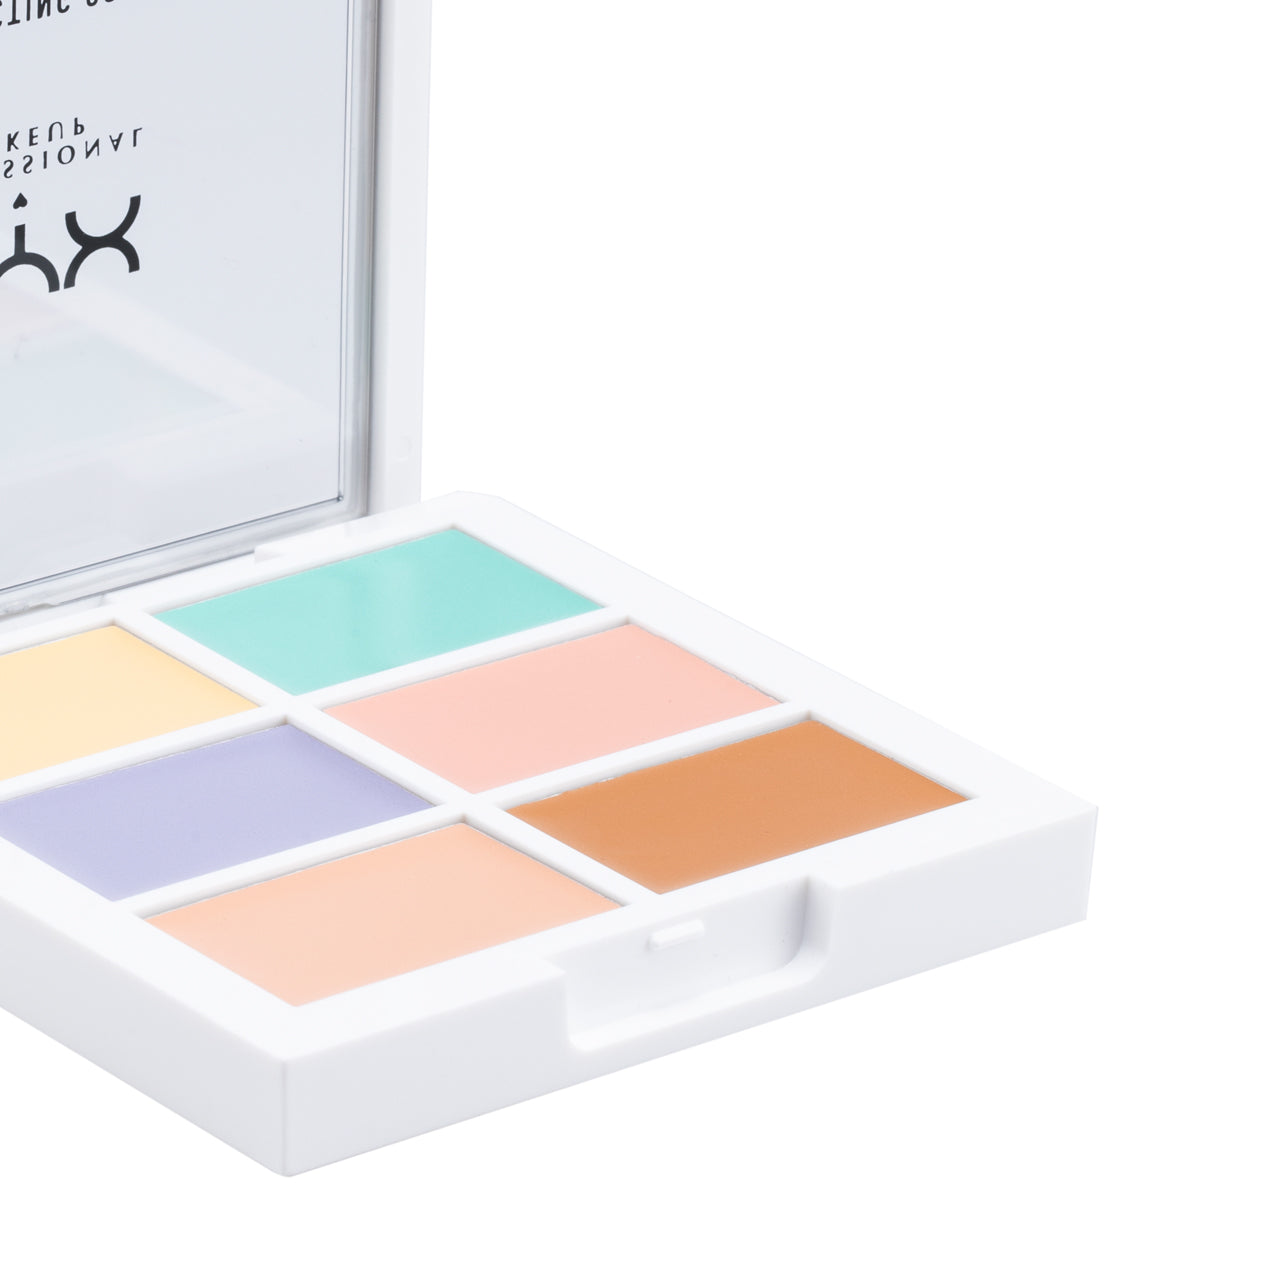 Nyx Color Correcting Palette 9G | Sasa Global eShop